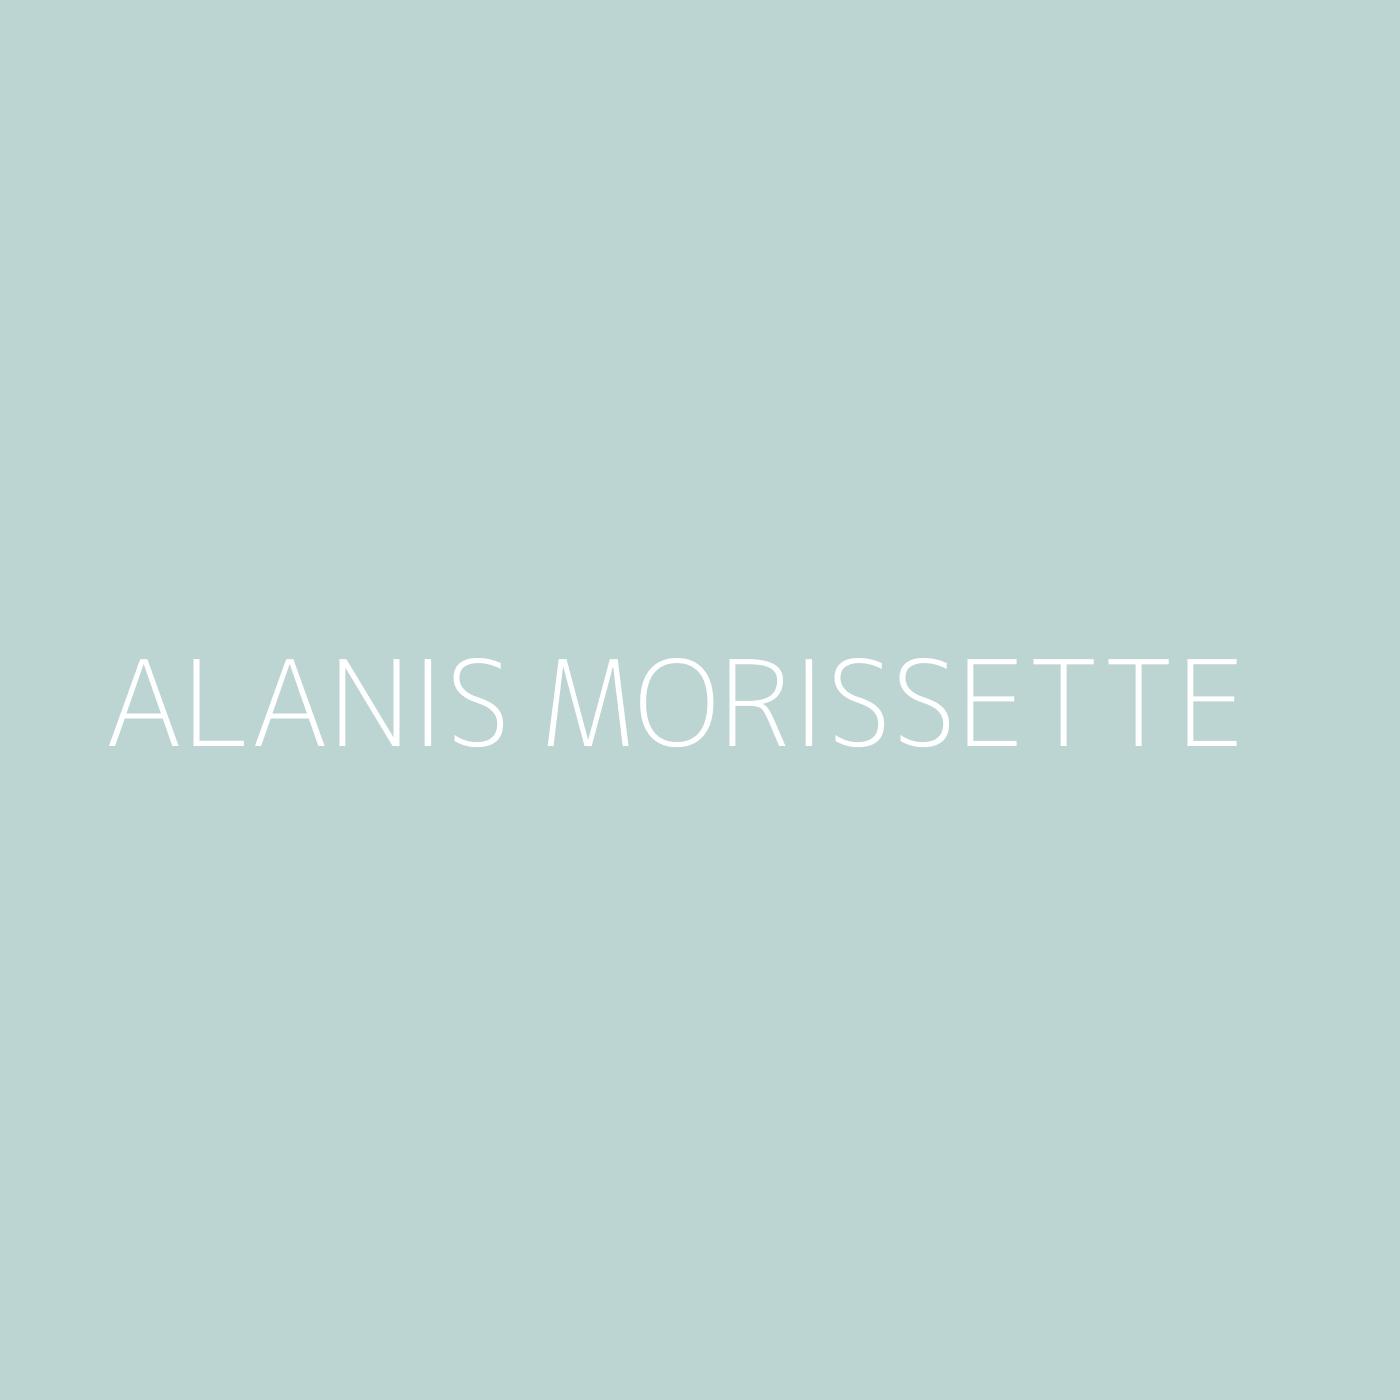 Alanis Morissette Playlist Artwork